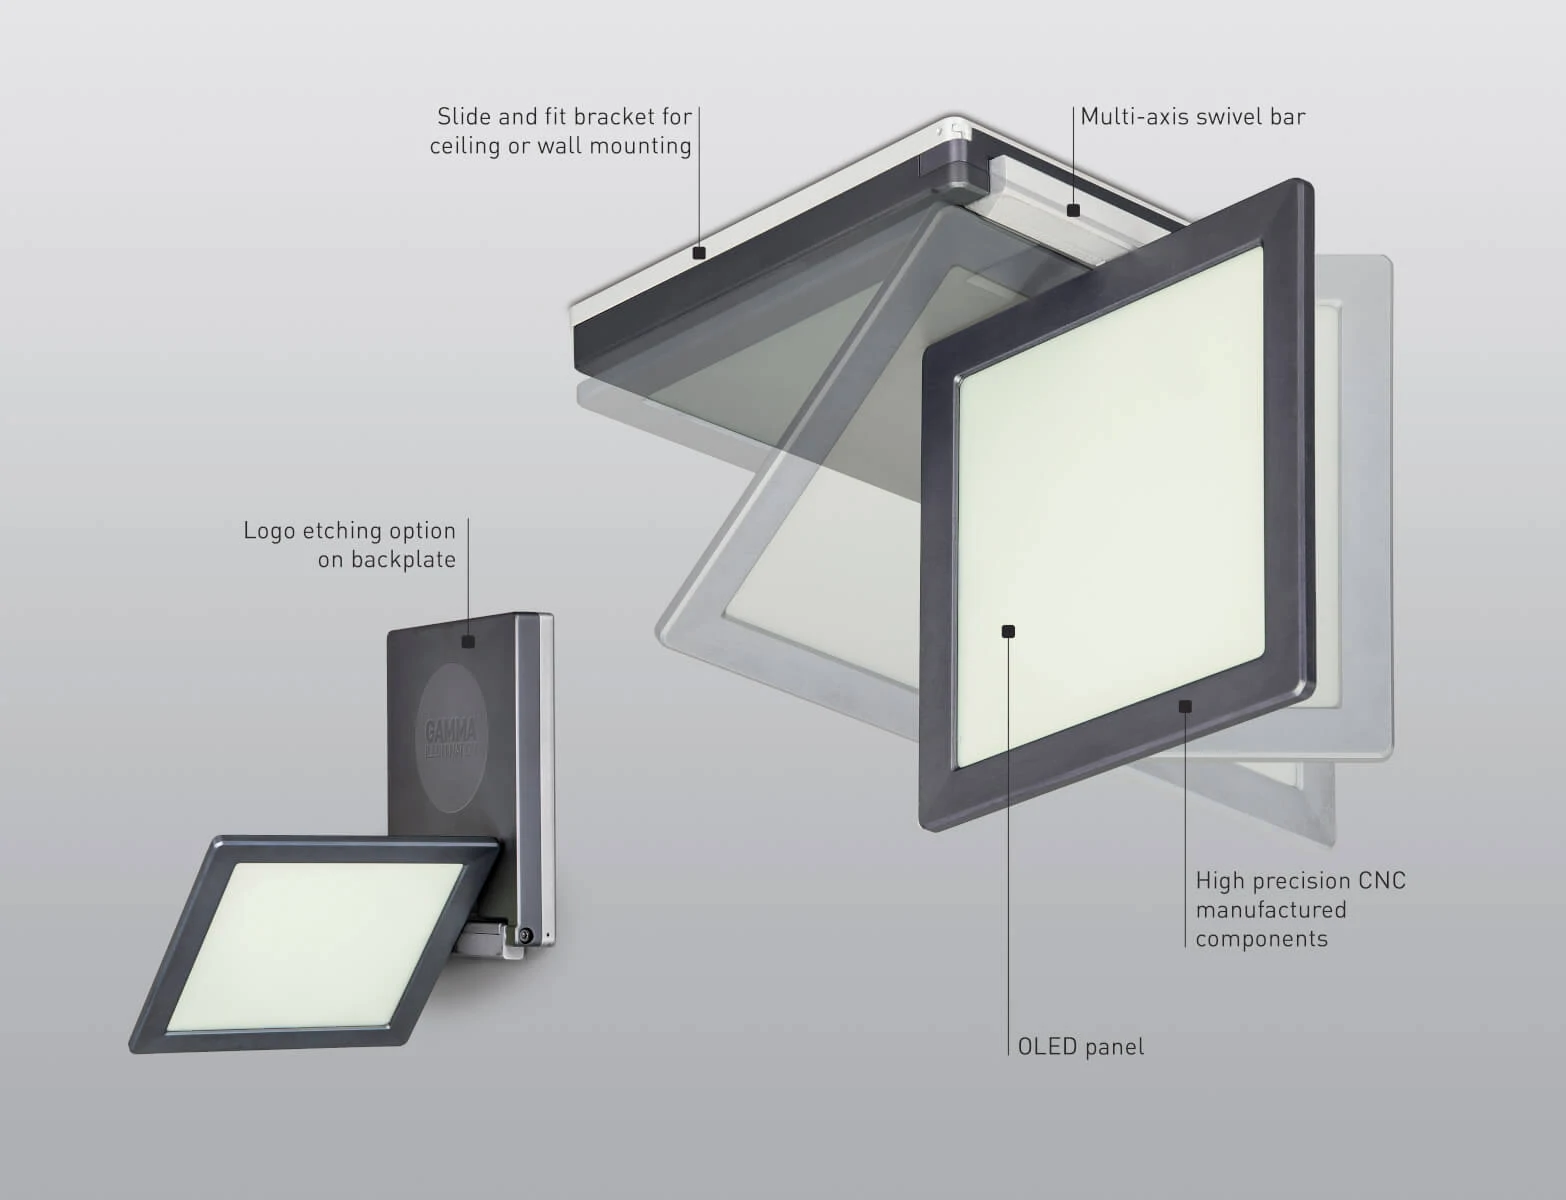 Features of OLED luminaire SquareOne from Gamma Illumination